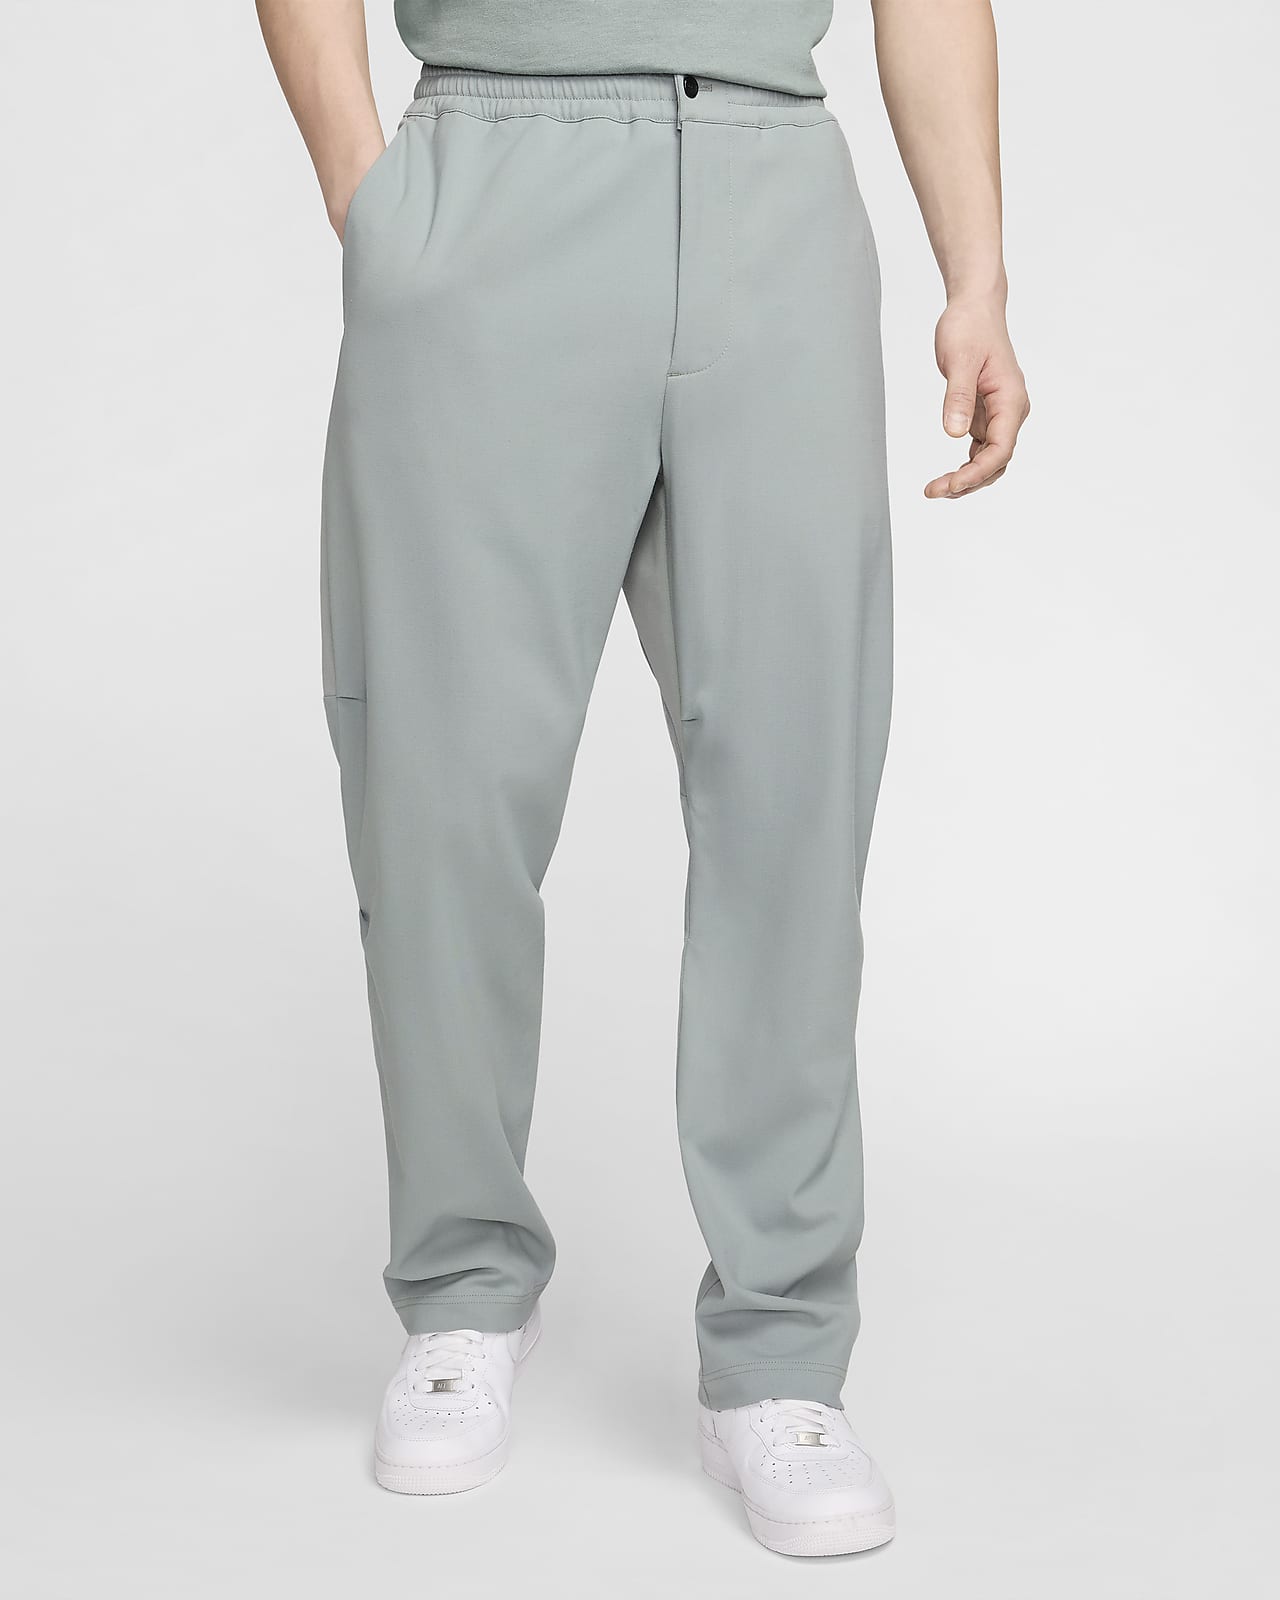 Nike Every Stitch Considered Men's Computational Pants 2.0